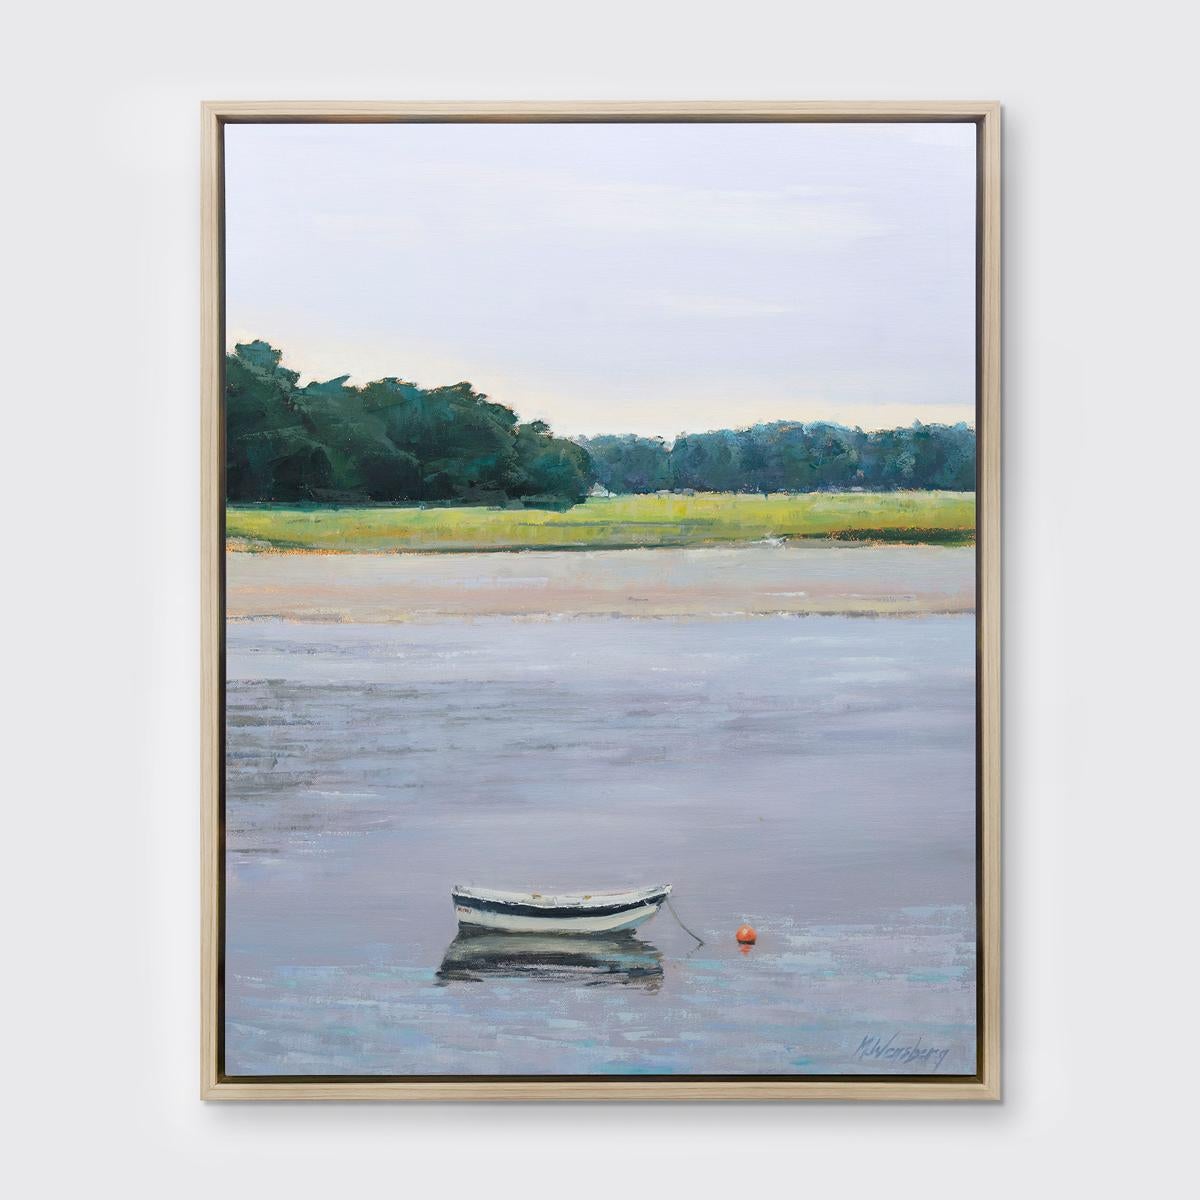 Molly Doe Wensberg Landscape Print - "Still Summer" Framed Limited Edition Print, 60" x 48"